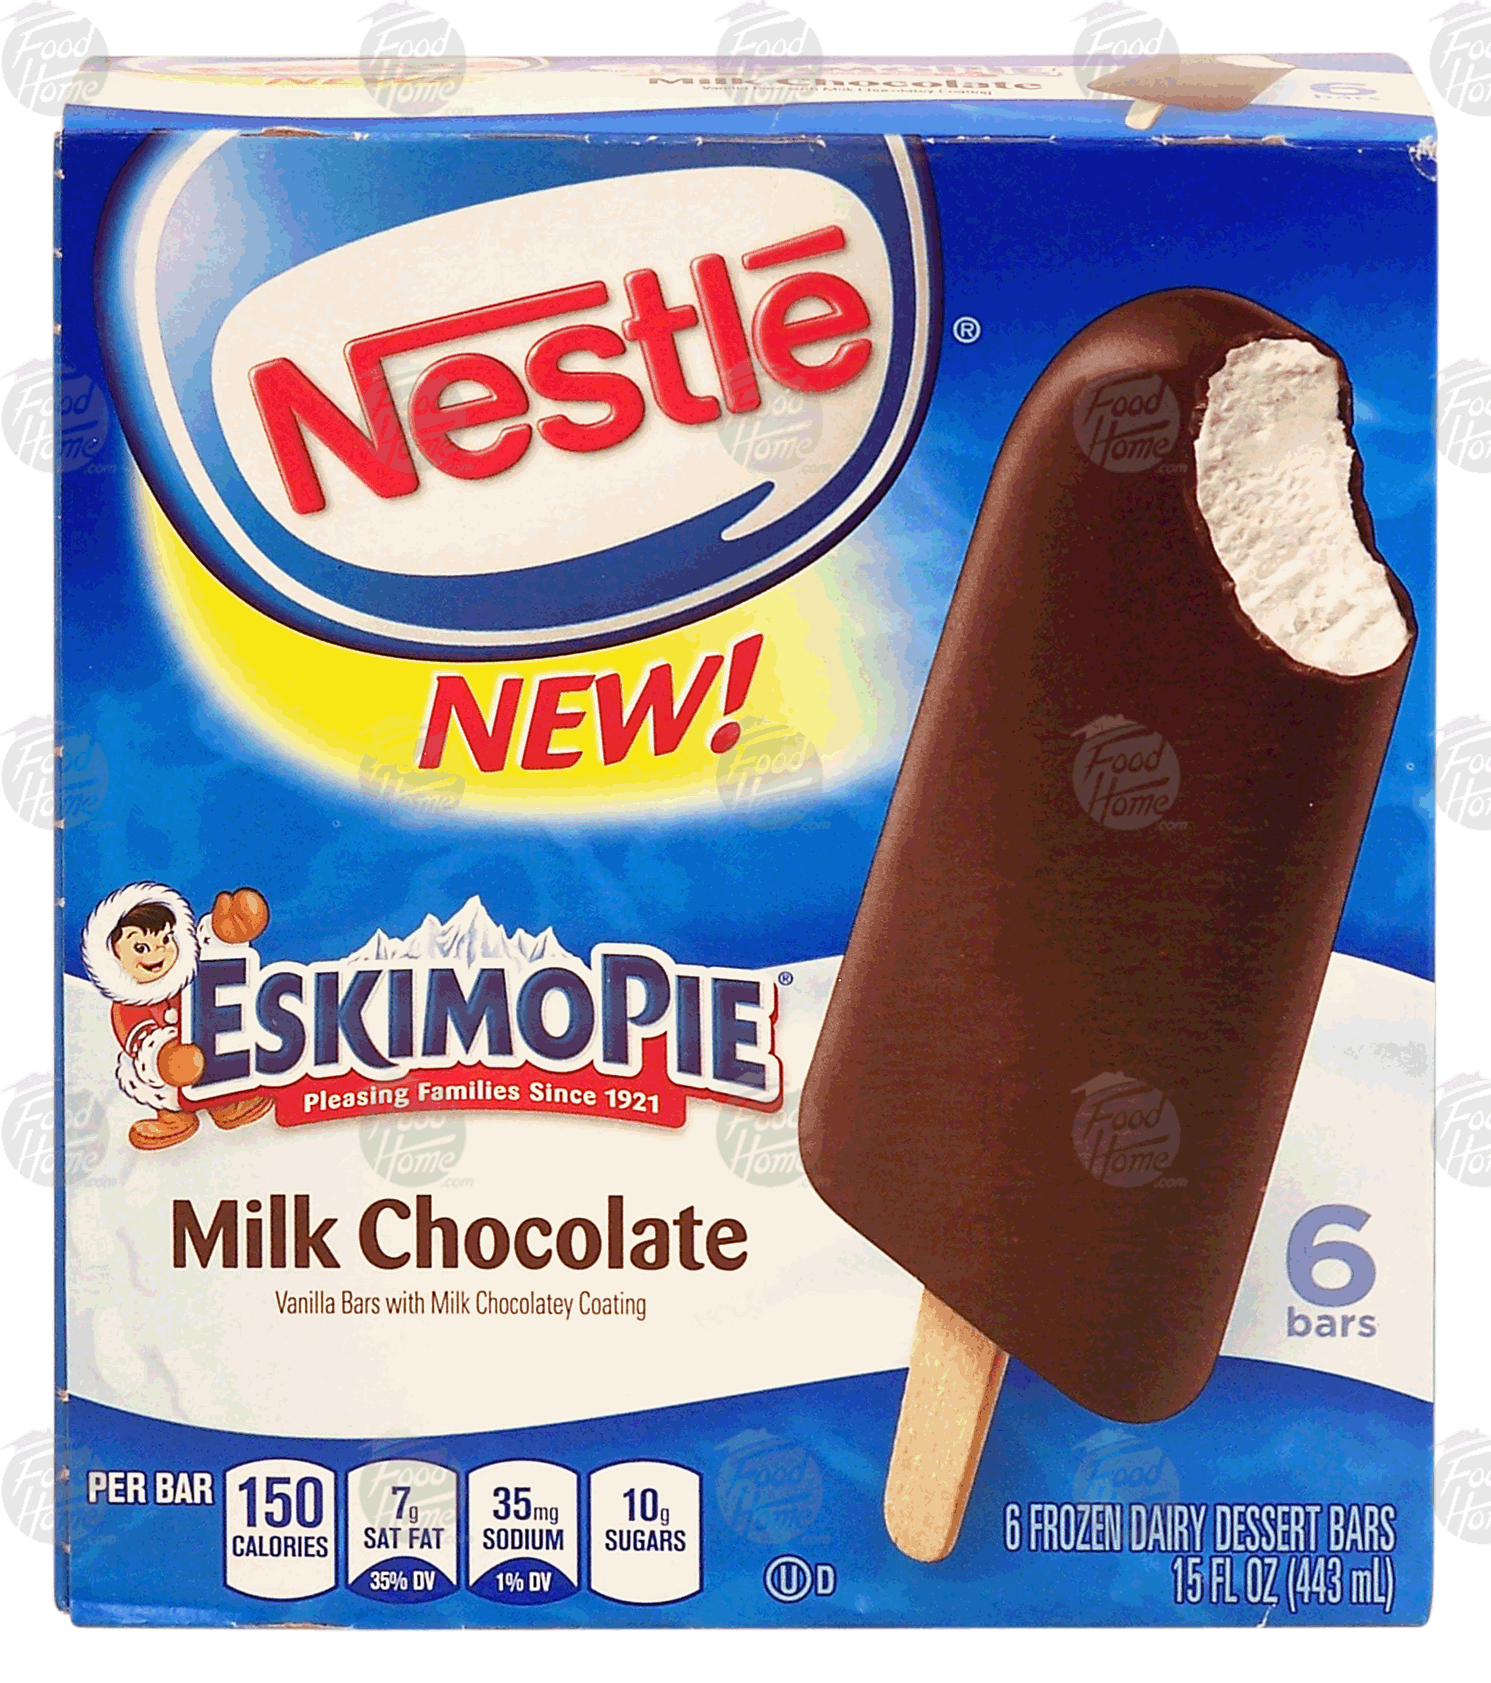 Эскимо язык. Эскимо Нестле. Мороженое Нестле эскимо. Эскимо Нестле шоколадное. Эскимо США.